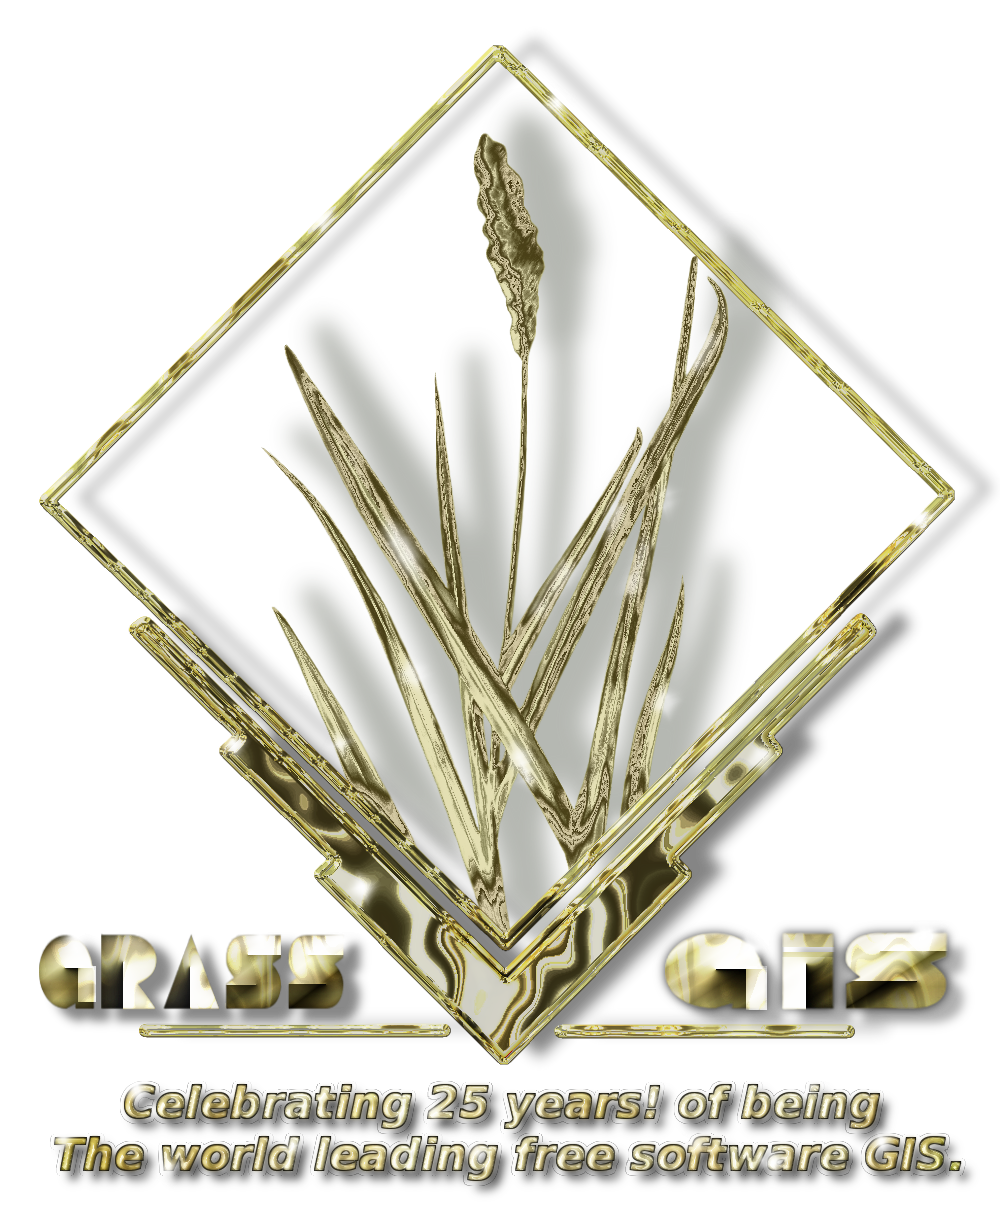 File:Grass logo gold text 25yr celebration.png